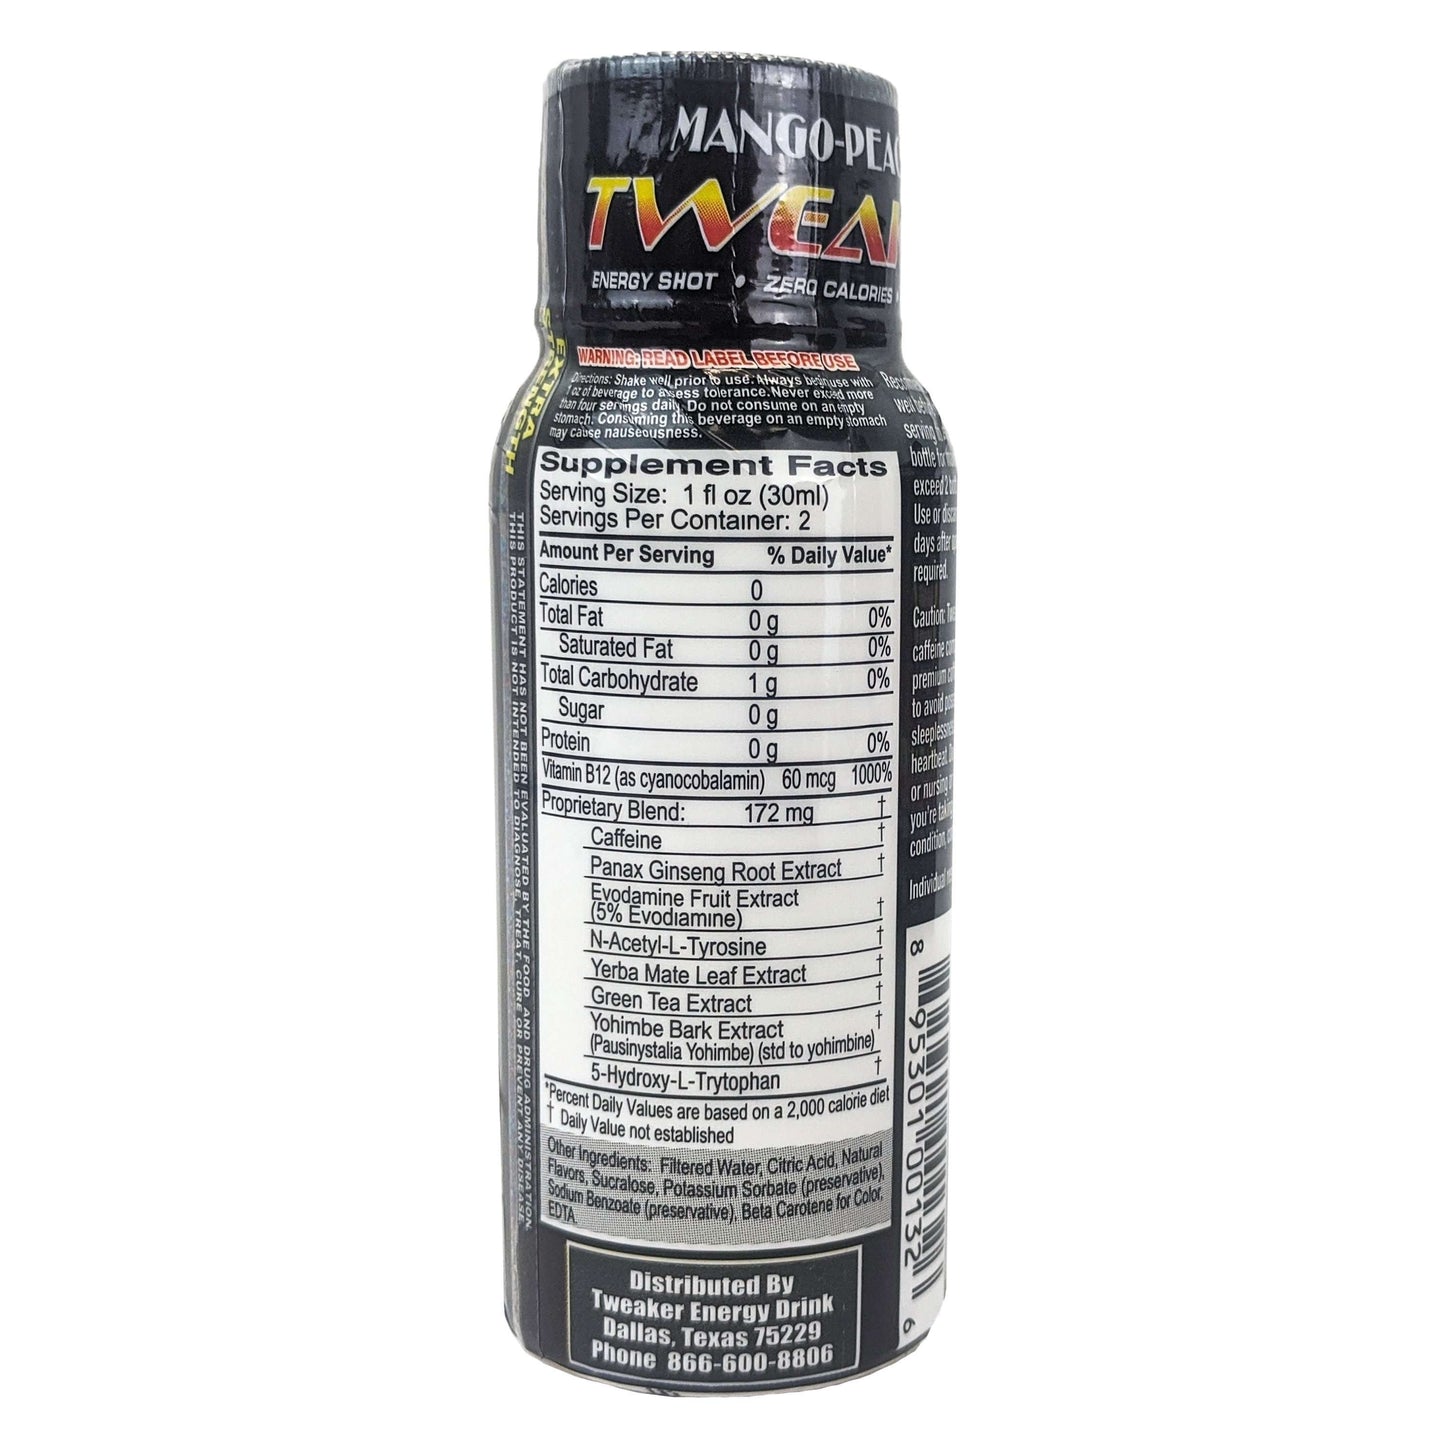 Tweaker 2oz Extra Strength Energy Shots, Box of 12, Mango-Peach Flavor